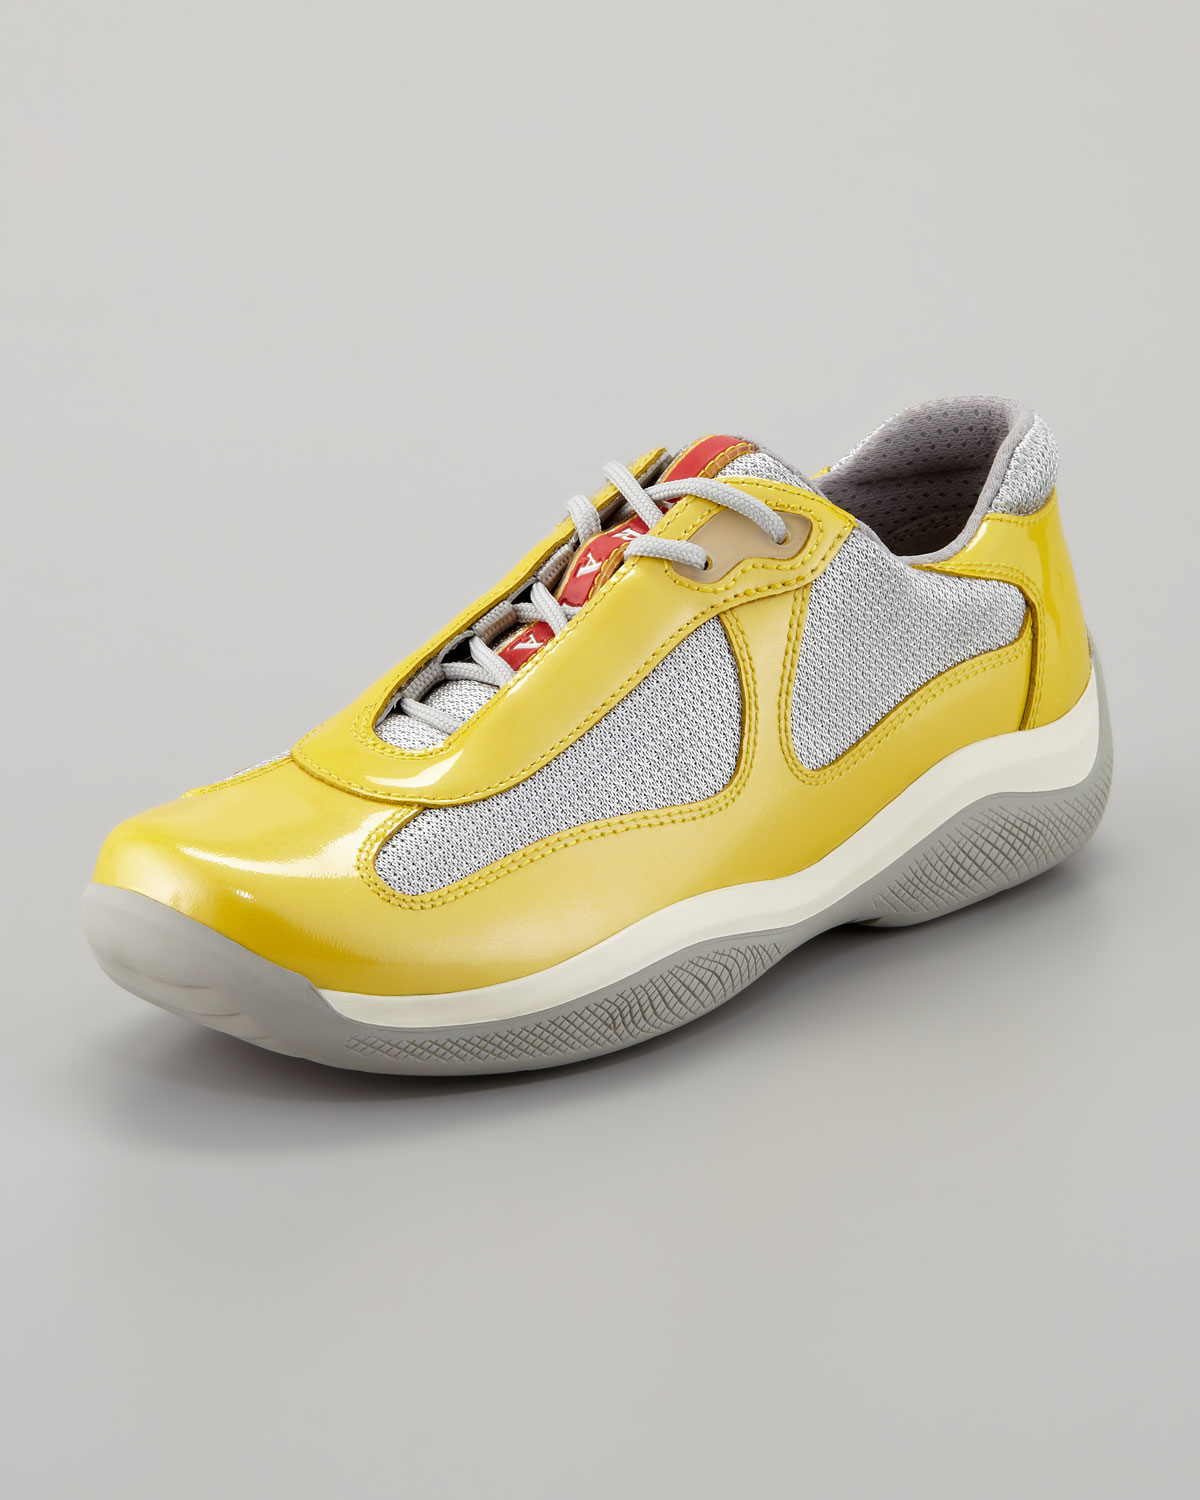 Prada Americas Cup Sneaker in Yellow - Lyst